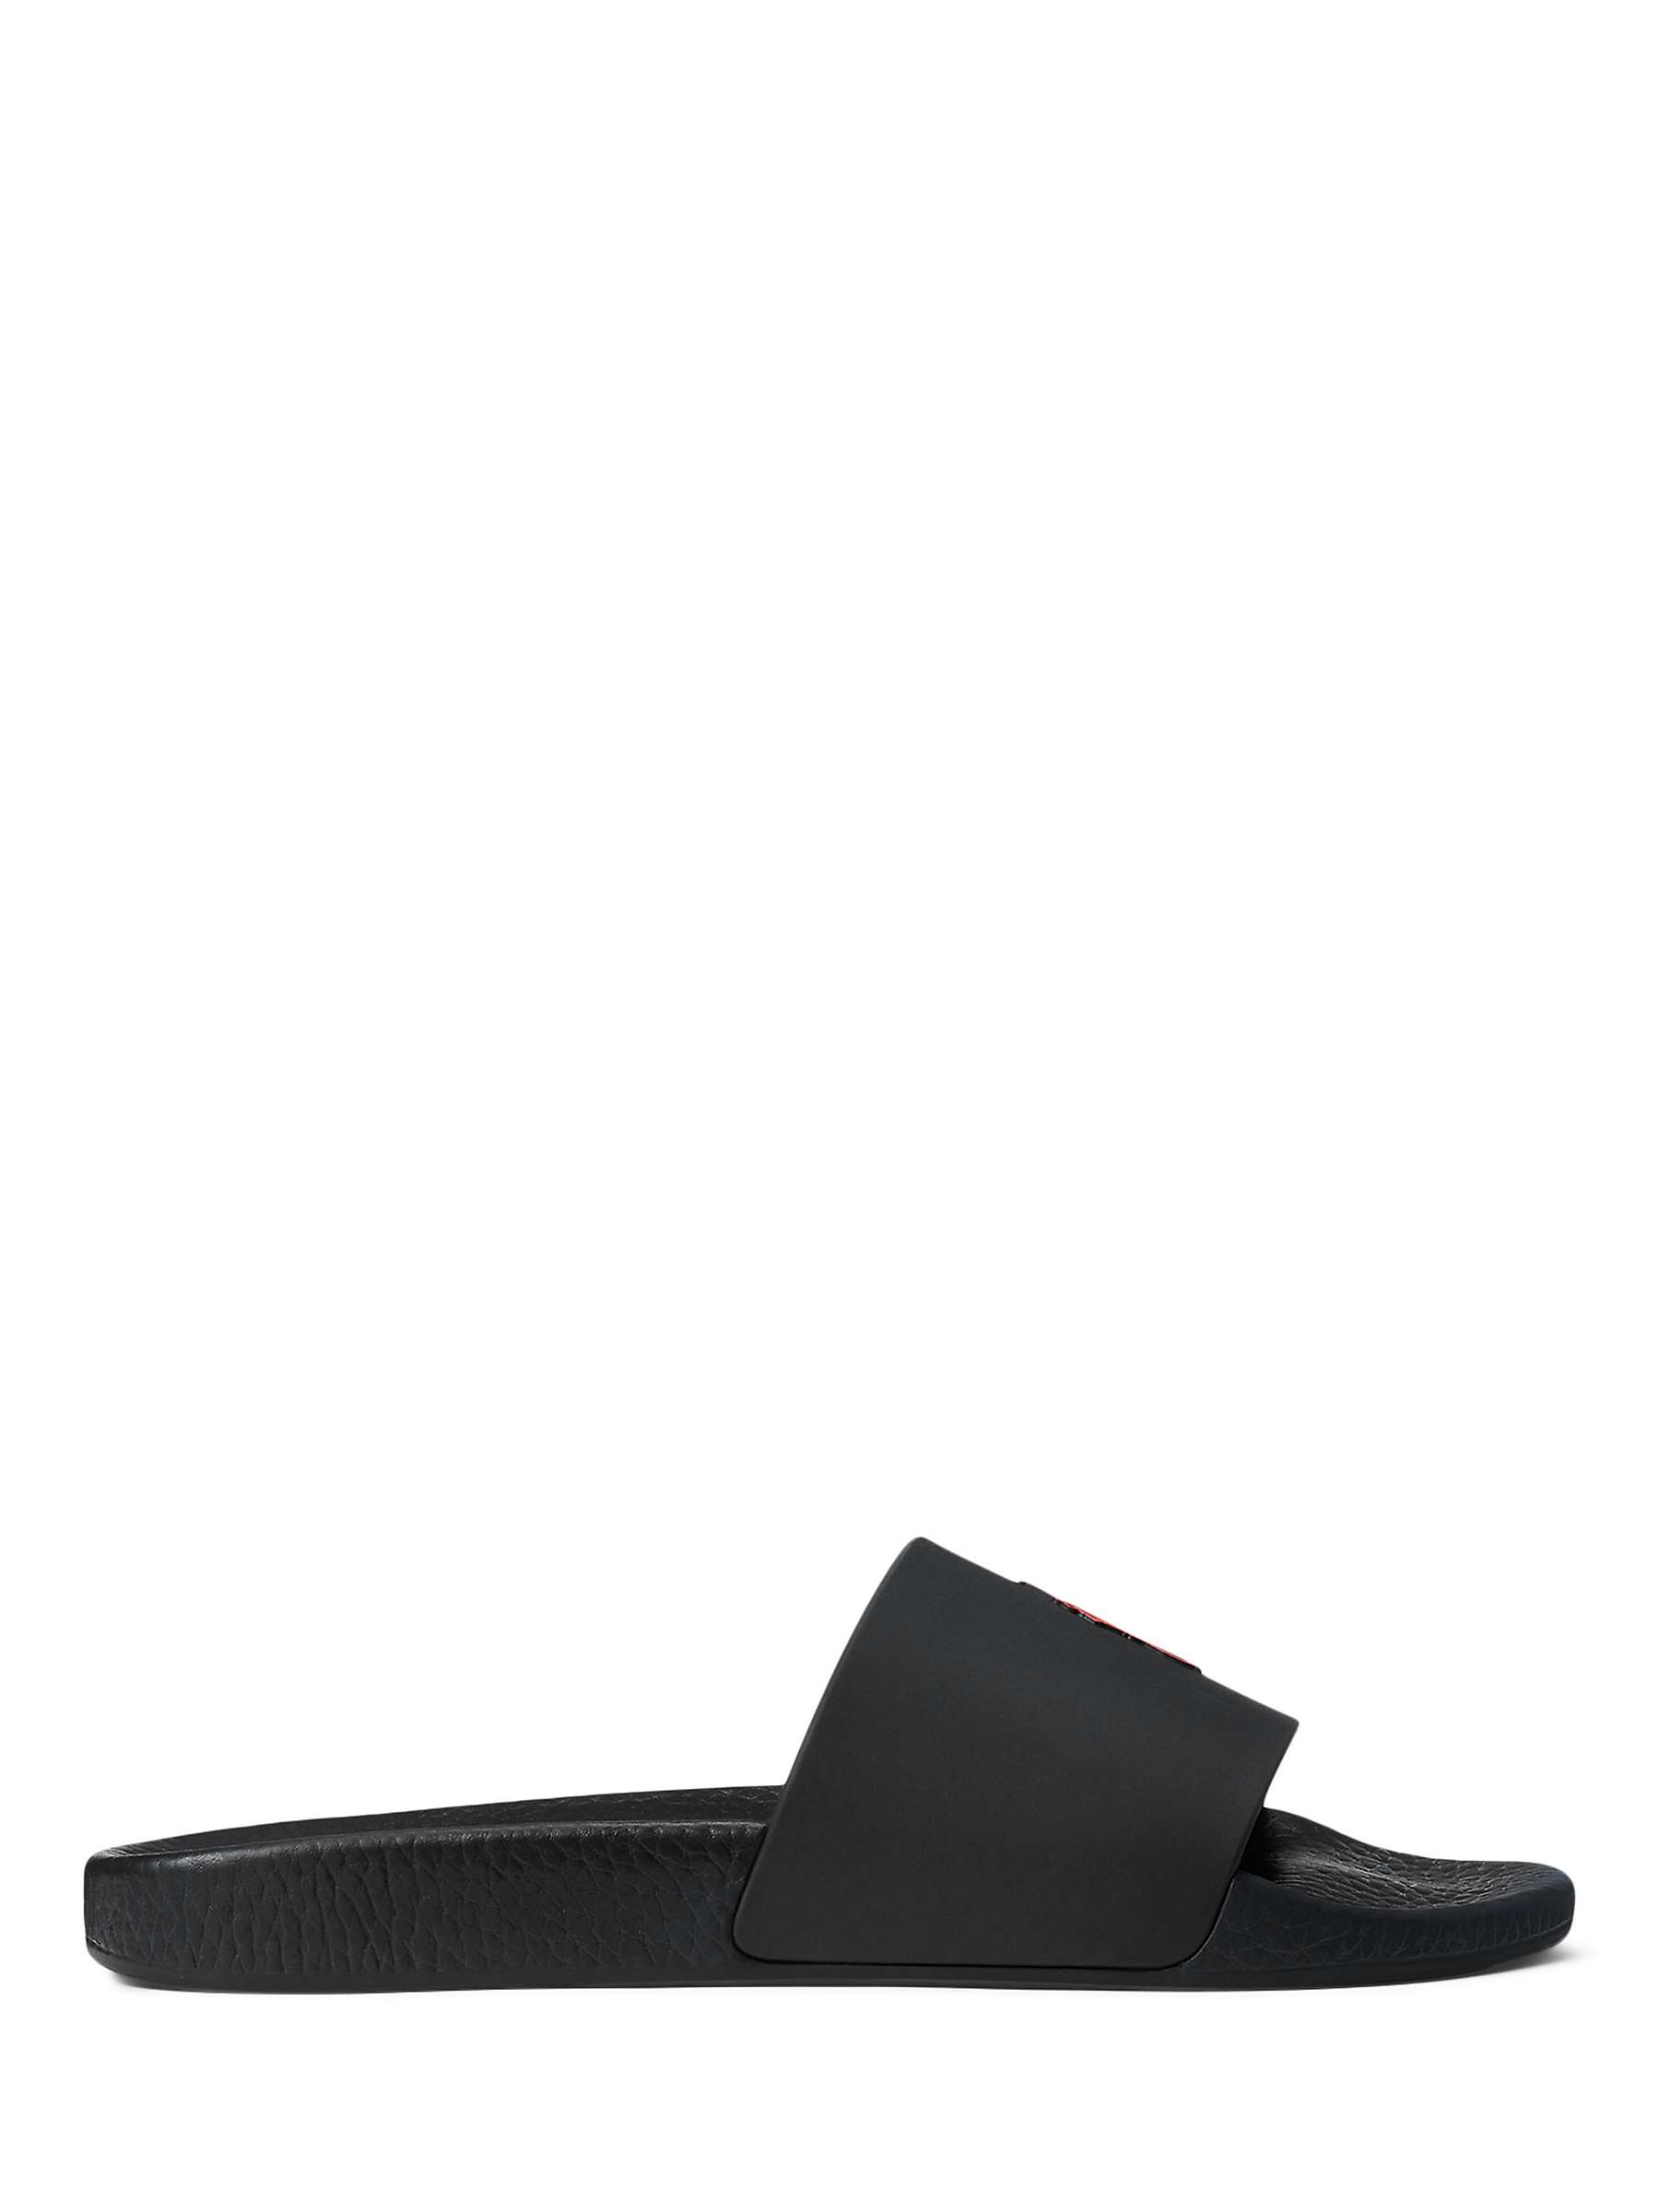 Buy Polo Ralph Lauren Slider Sandals, Black/Red Online at johnlewis.com